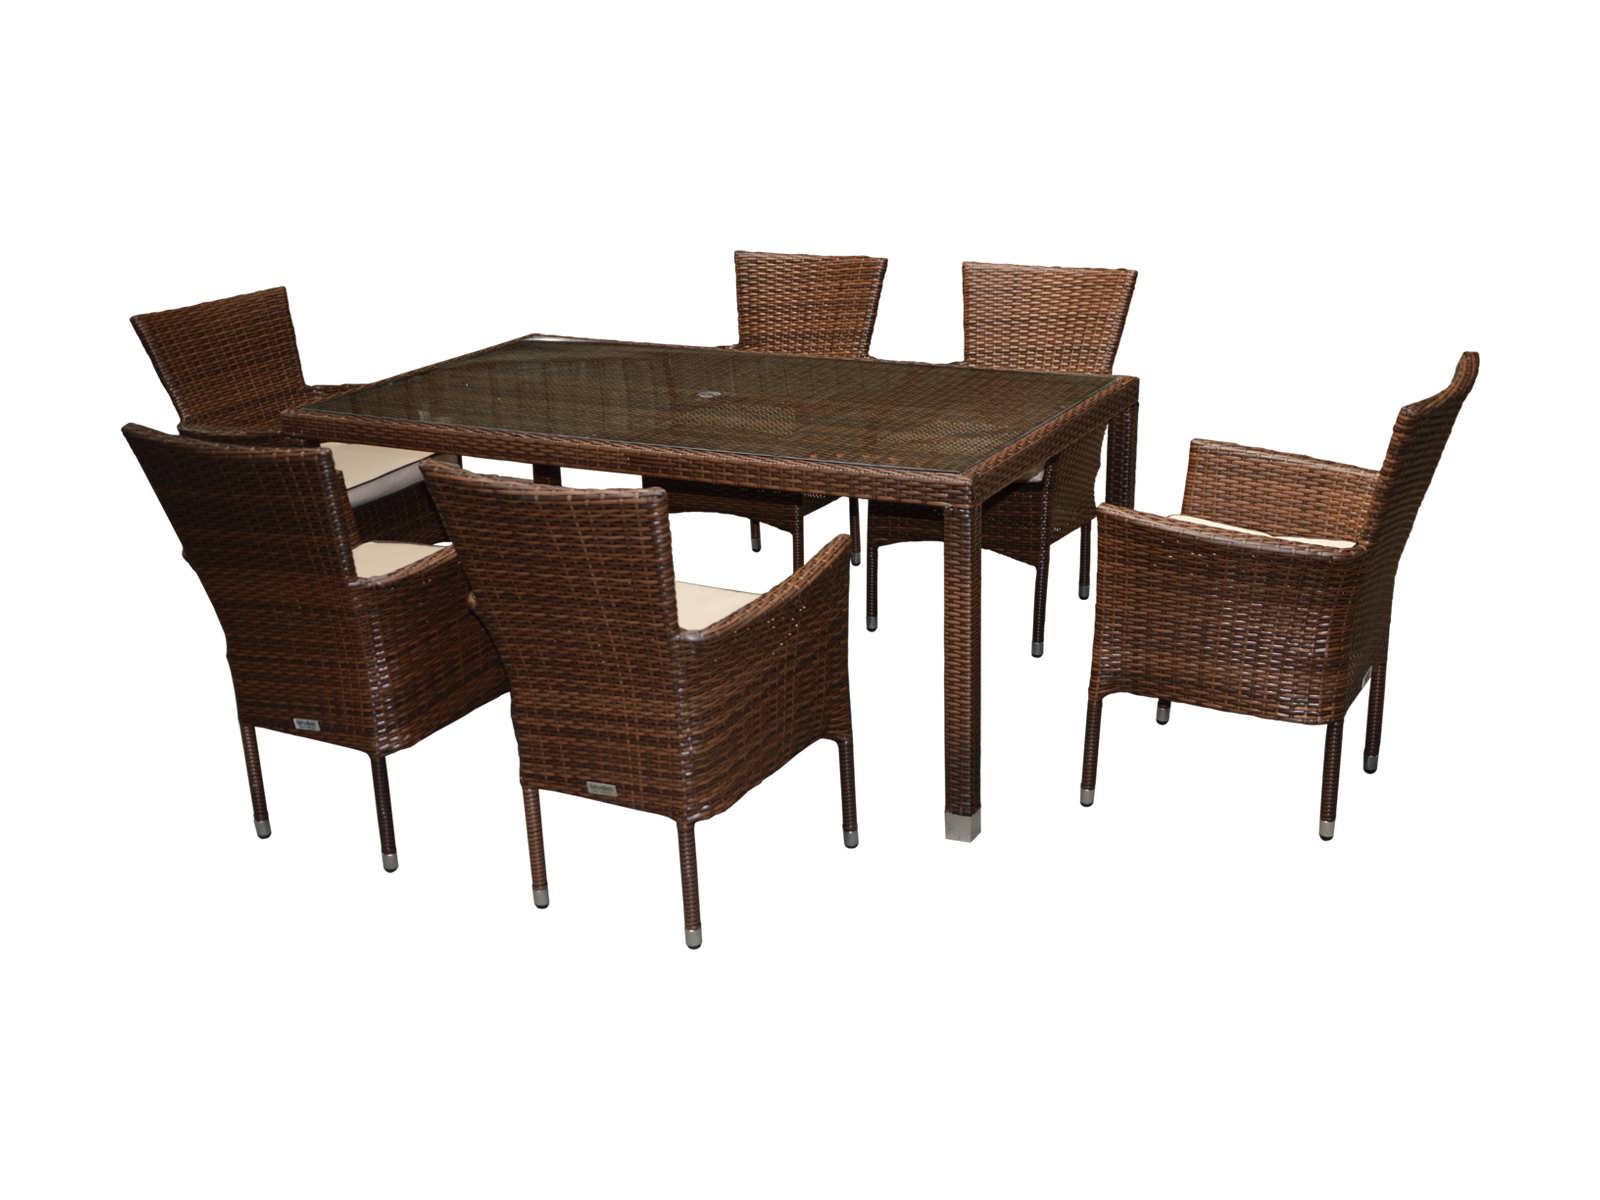 2 Reclining 6 Stackable Rattan Garden Chairs Open Leg Rectangular Table Set In Brown Cambridge Rattan Direct